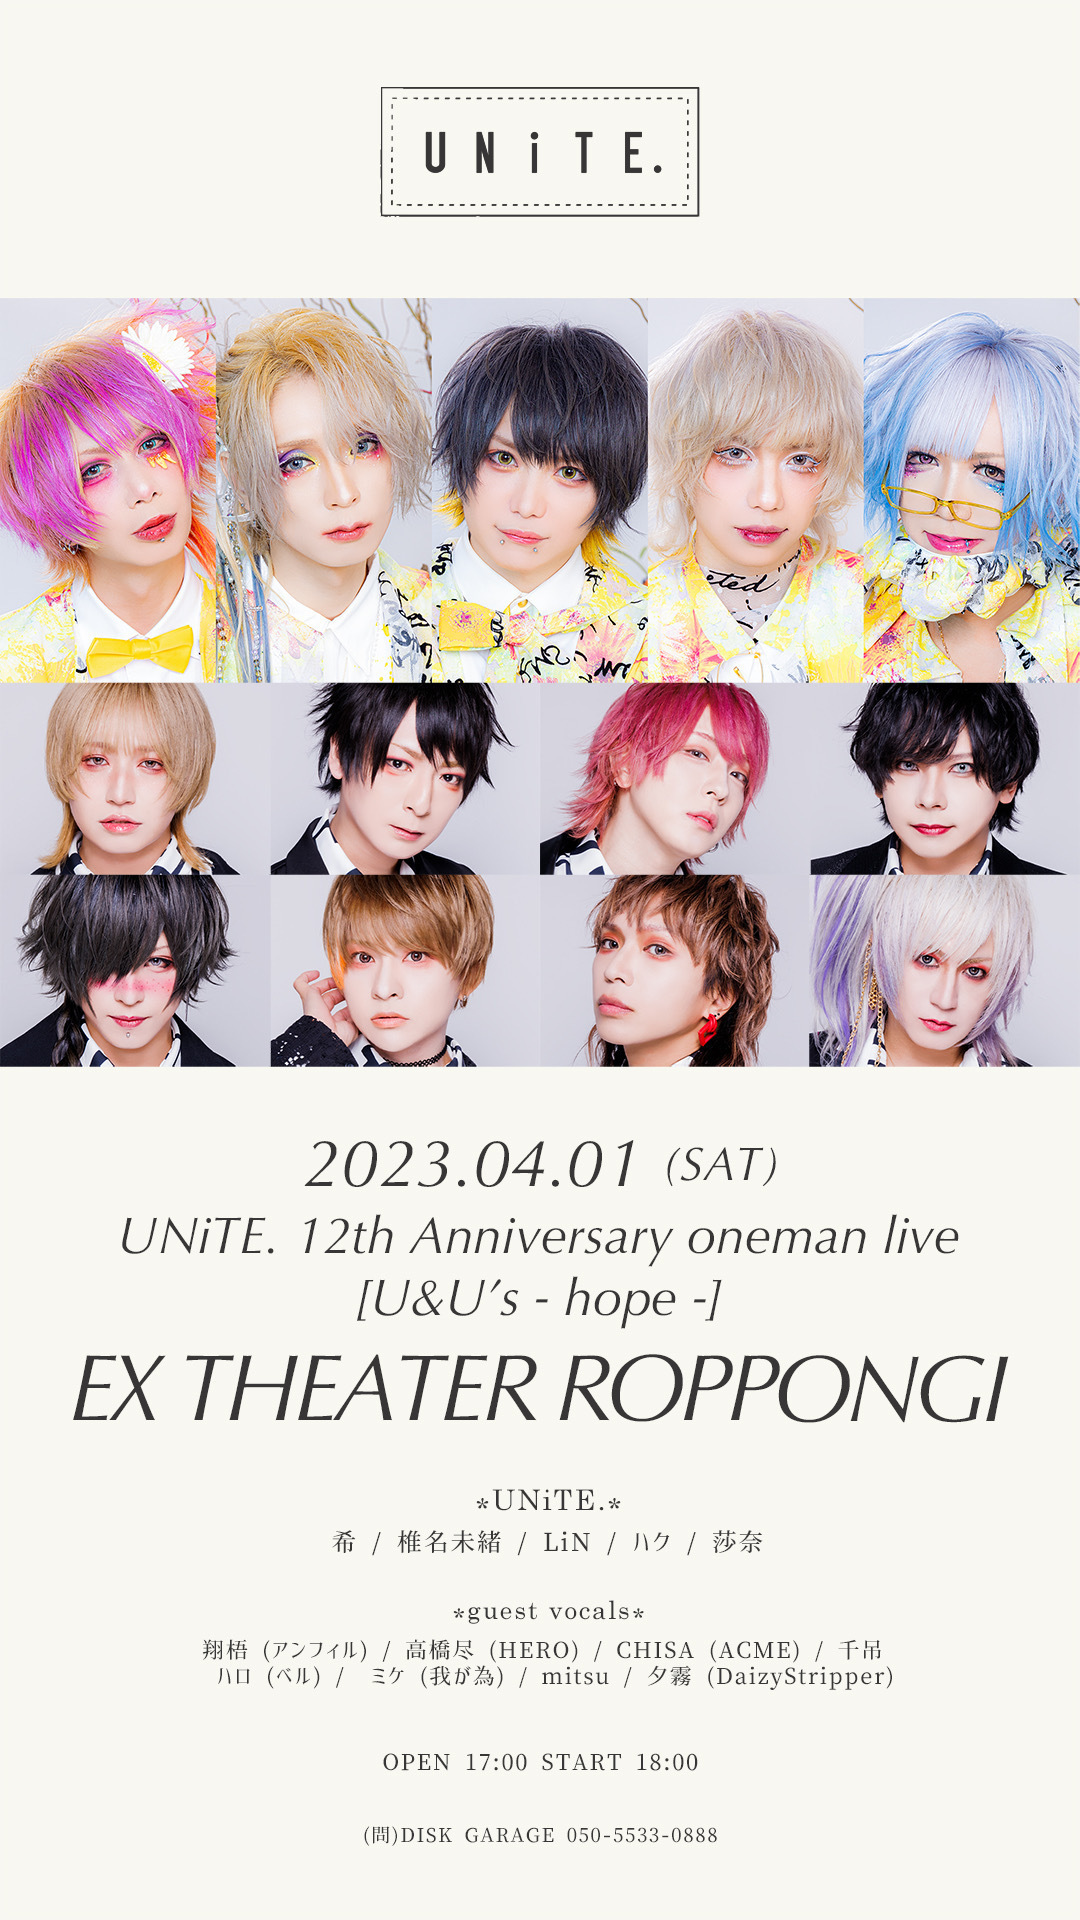 夕霧出演UNiTE. 12th Anniversary oneman live [U&U's -hope 